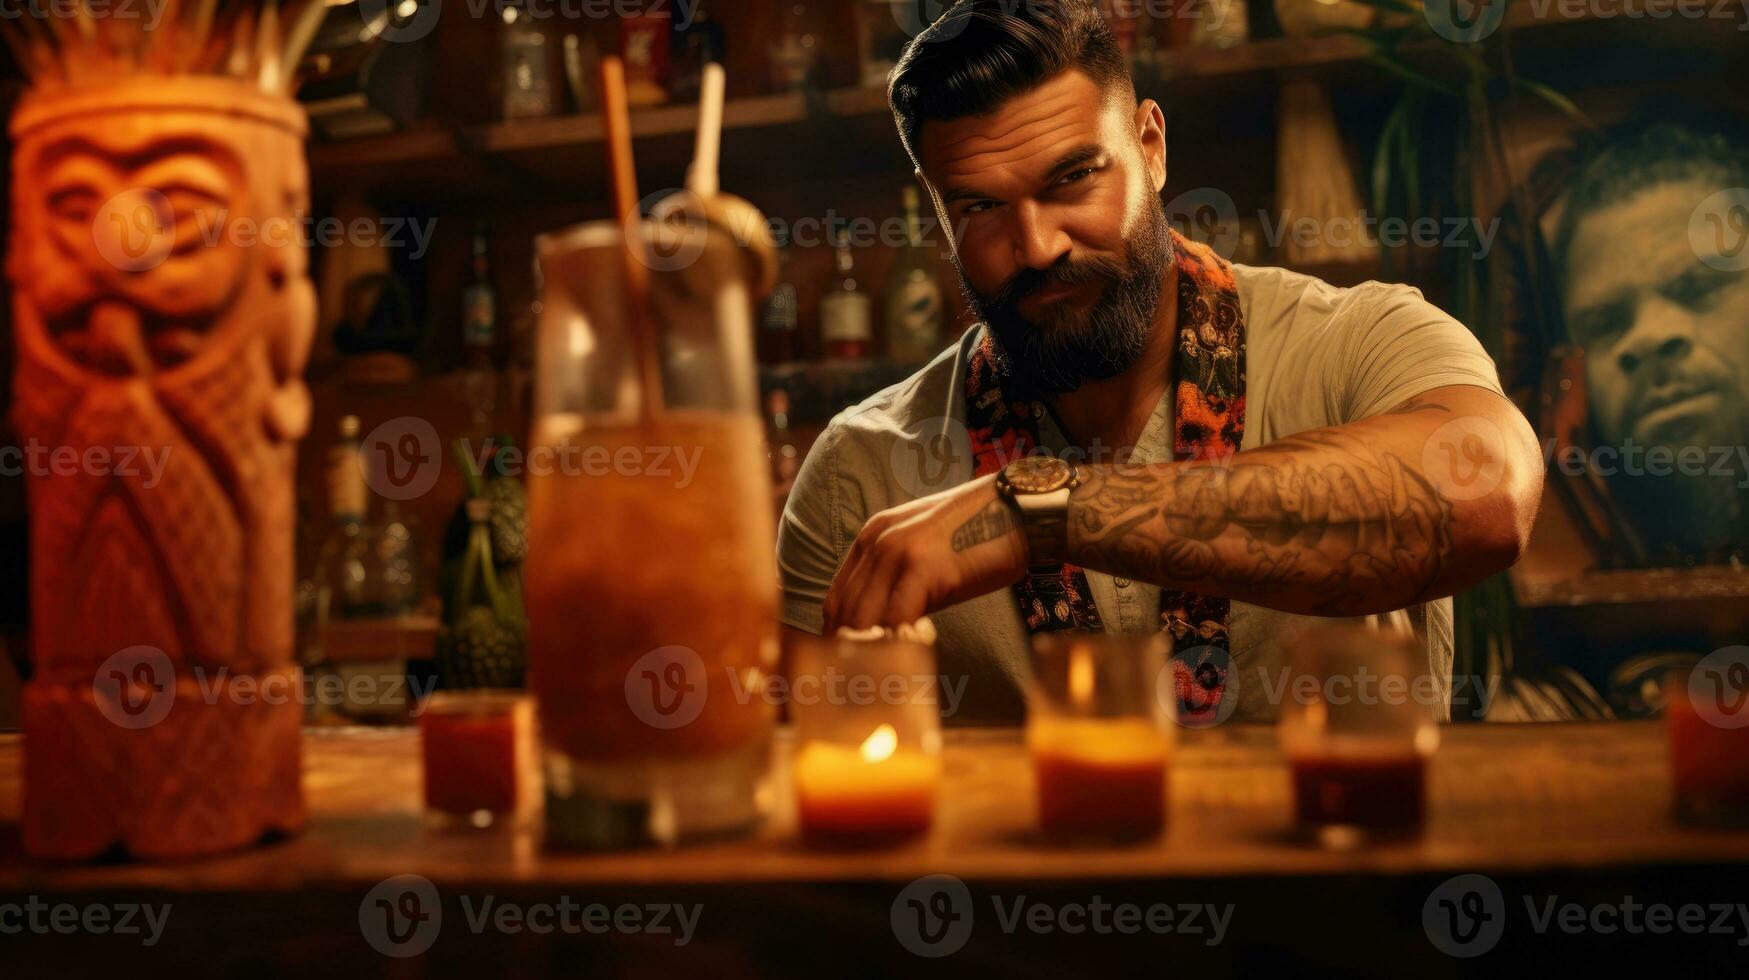 tiki boisson cocktails. tropical tiki des cocktails bar. amical Masculin barman photo